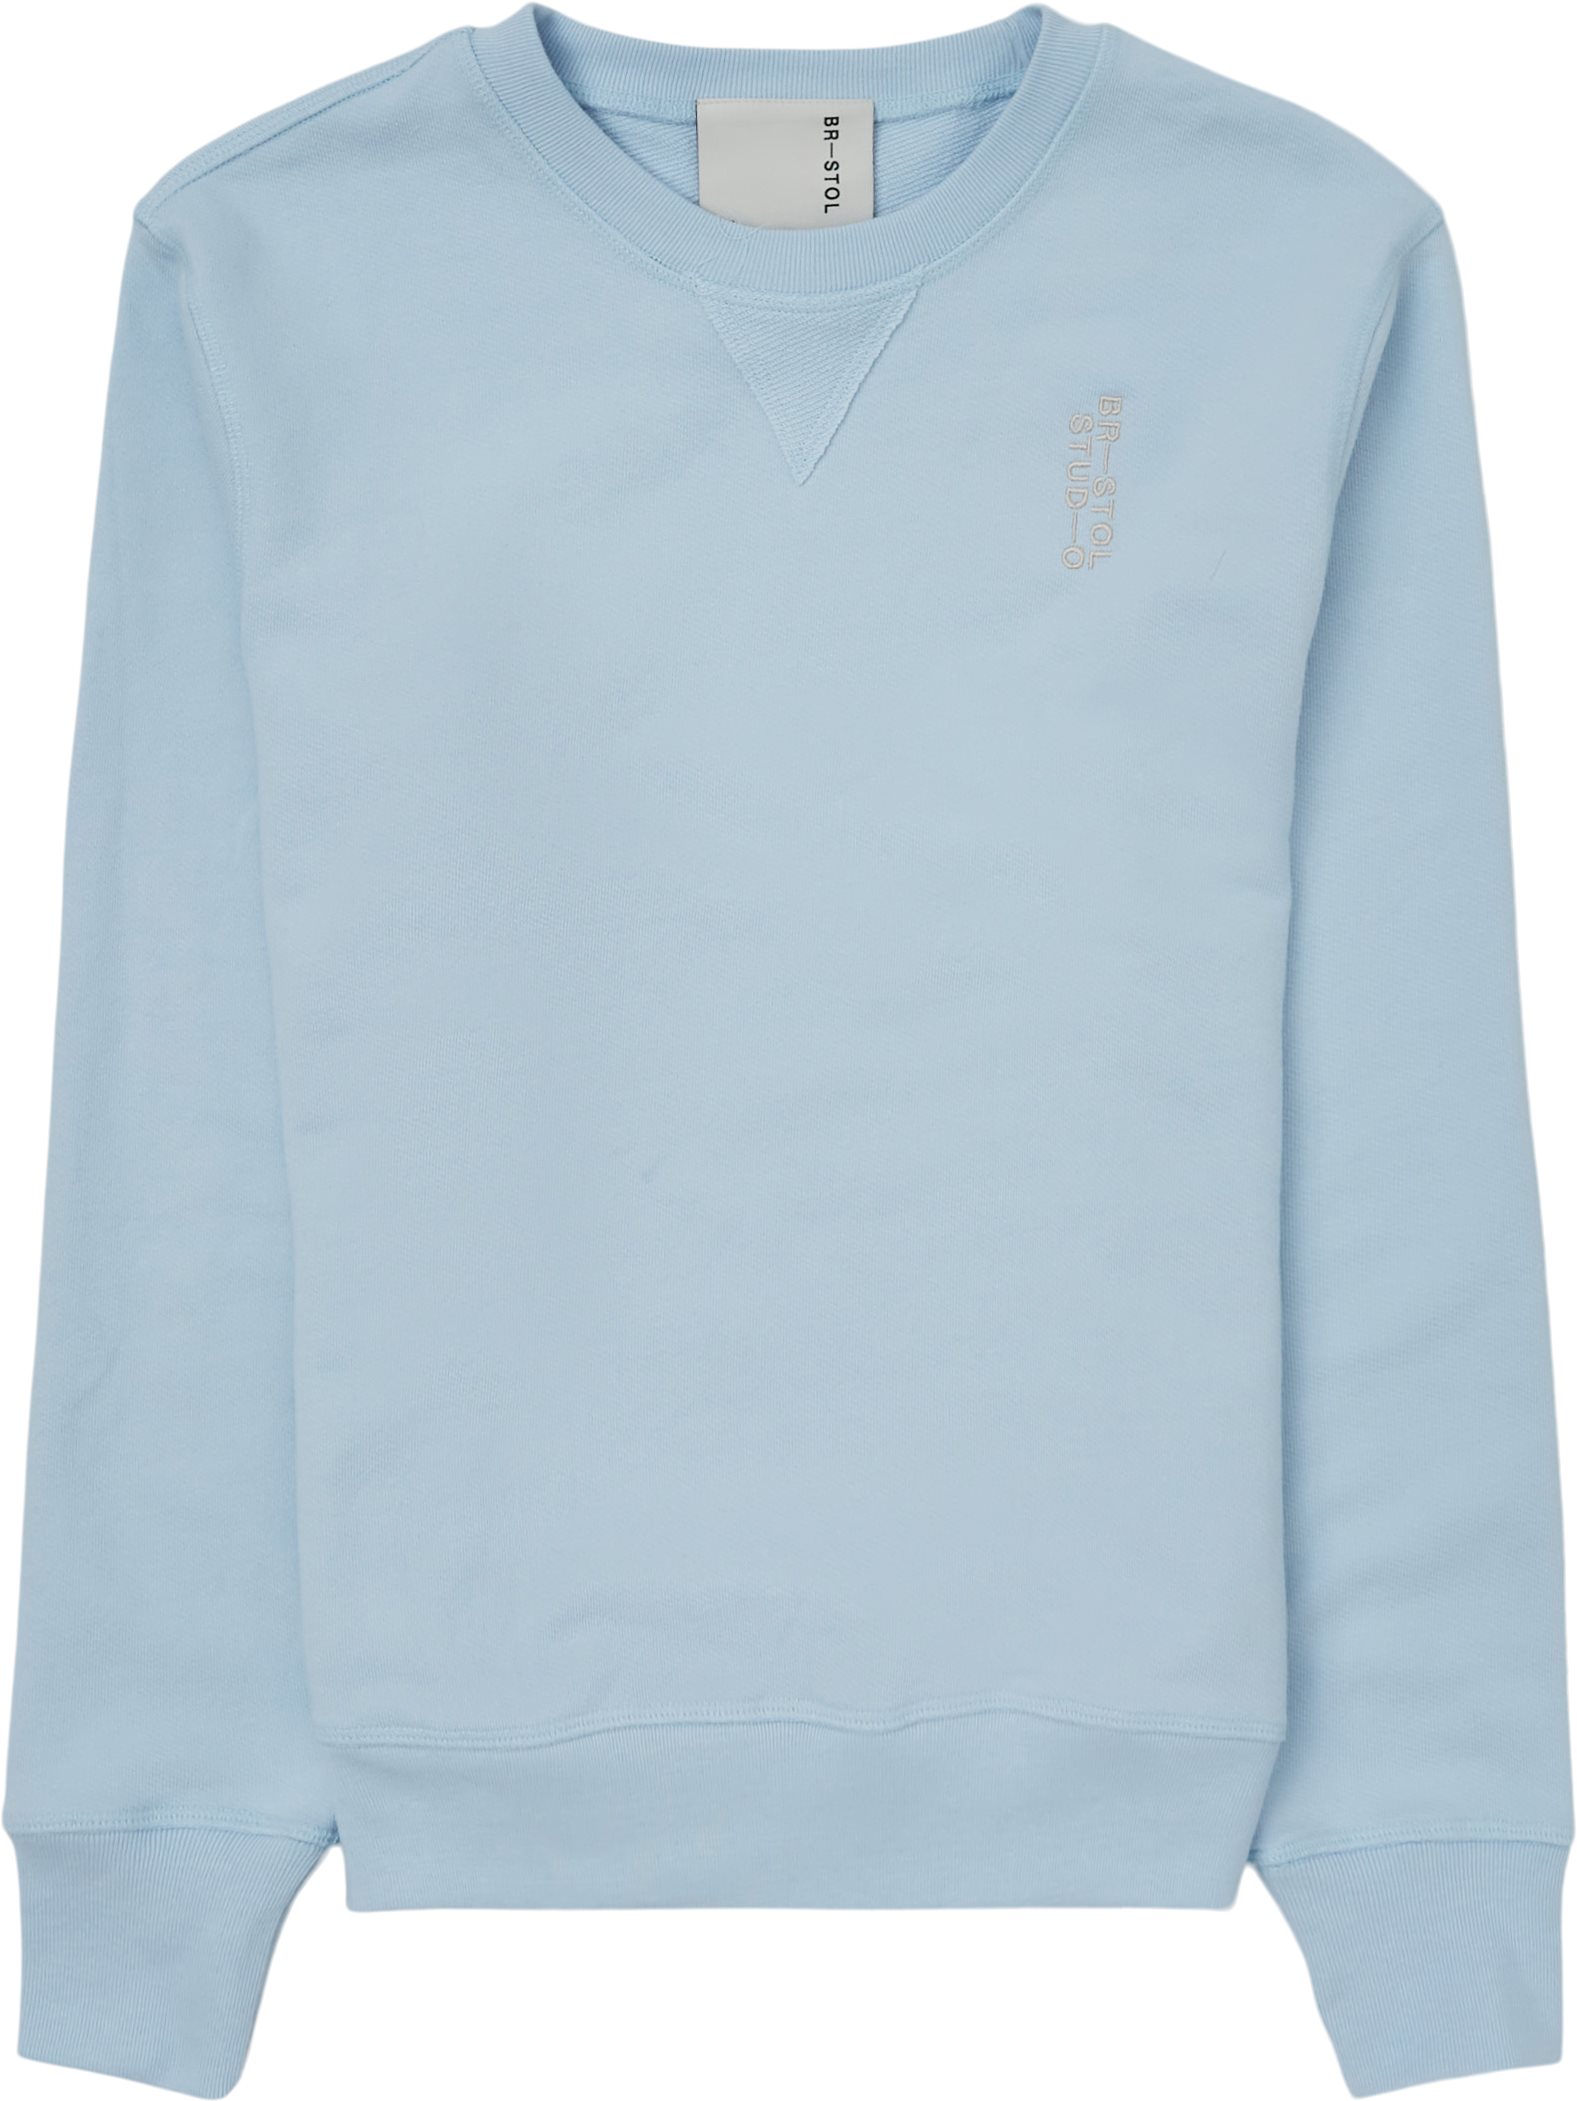 Signature Crewneck - Sweatshirts - Oversize fit - Blue